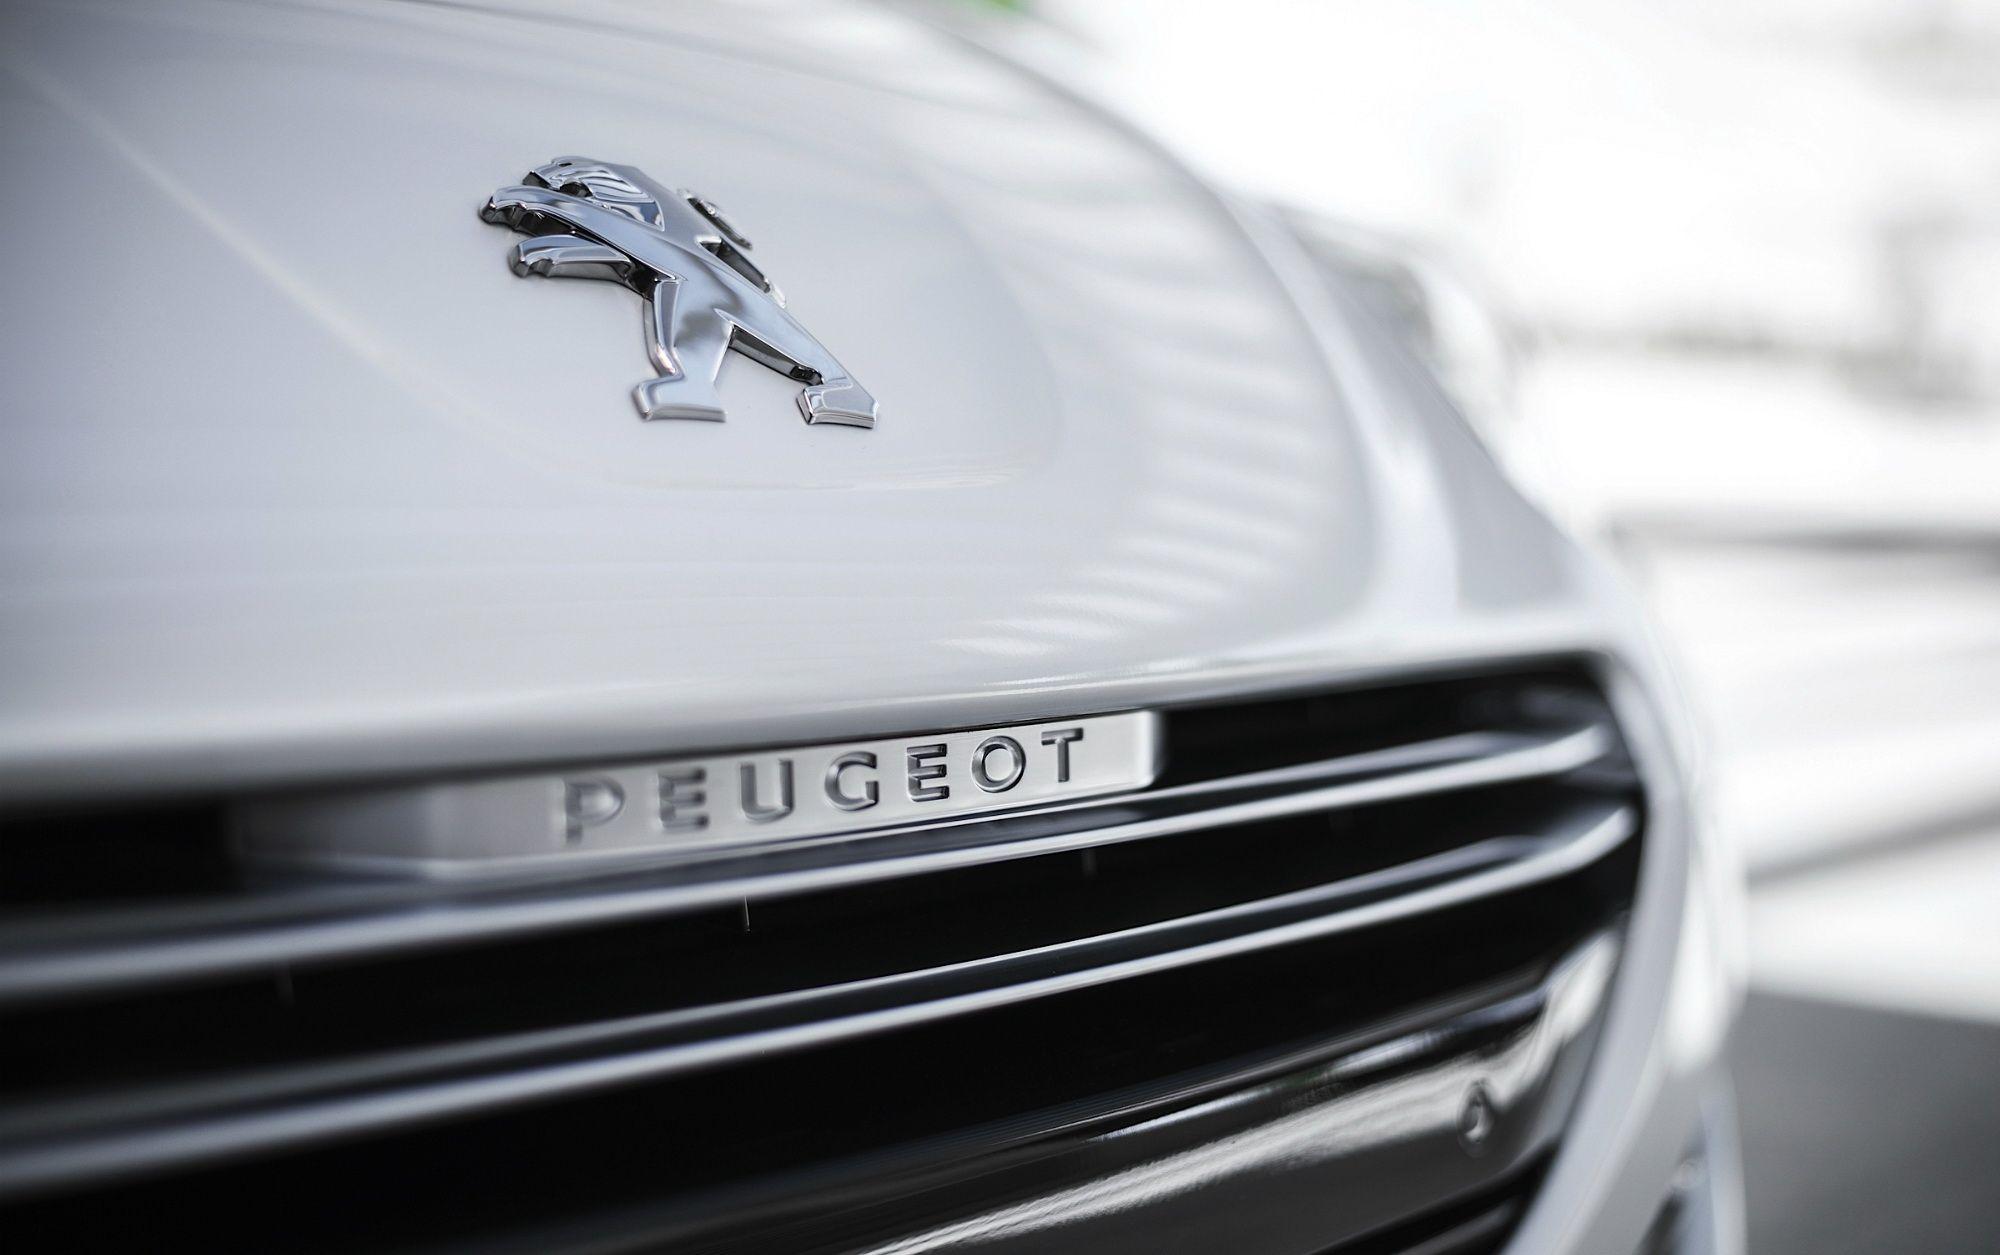 Grey Lion Car Logo - Peugeot Logo, Peugeot Car Symbol Meaning and History | Car Brand ...